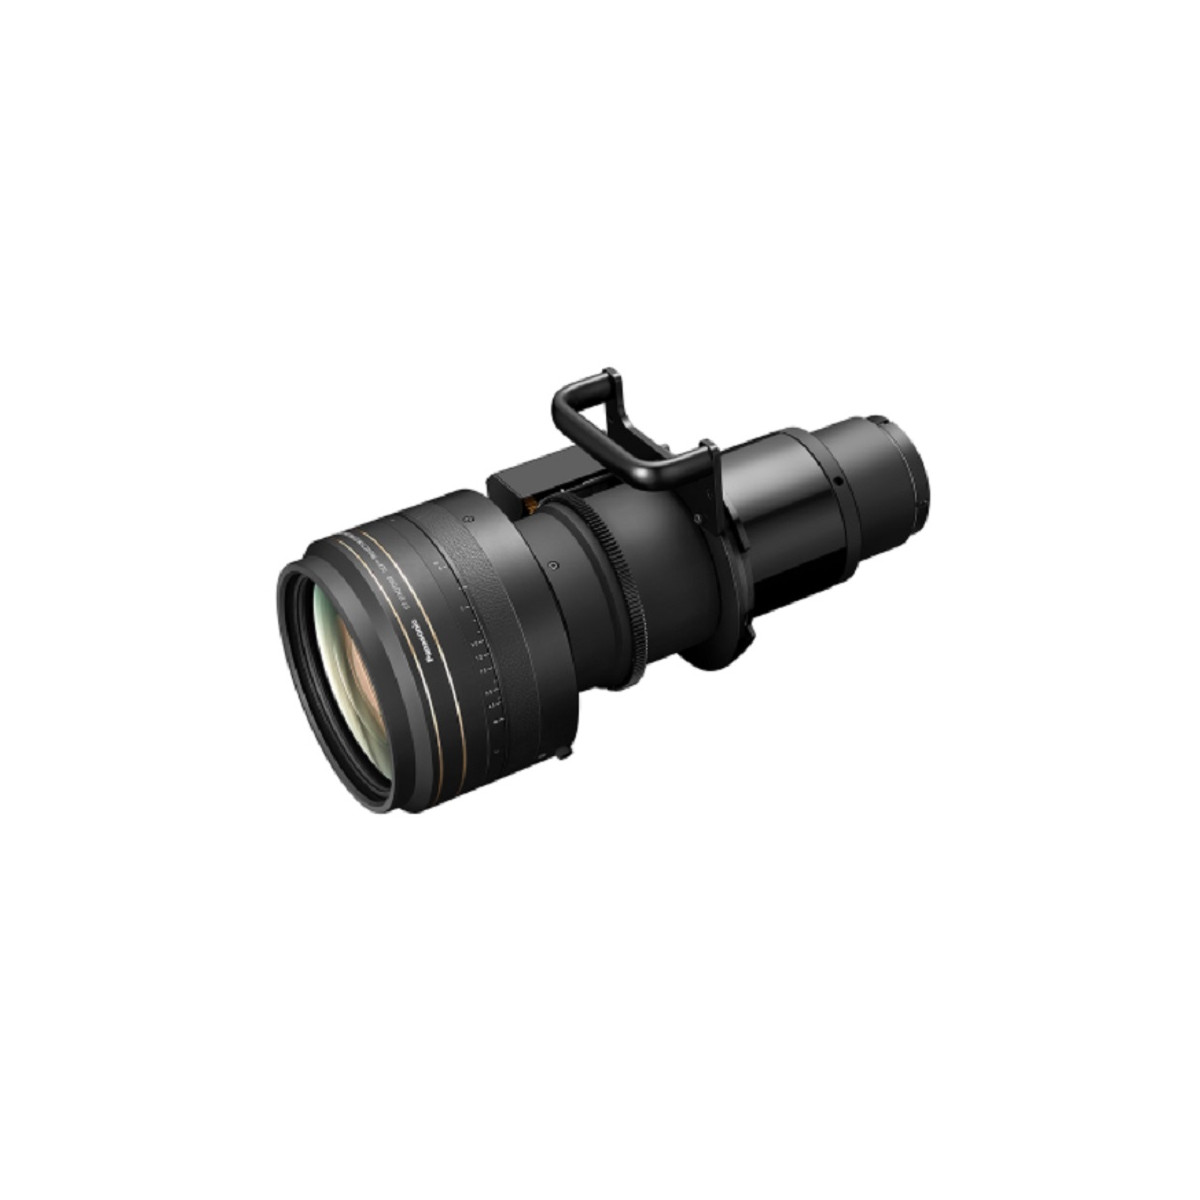 Óptica 3DLP Lens. Tipo 2.1 - 3.4:1. Para: PT-RQ50